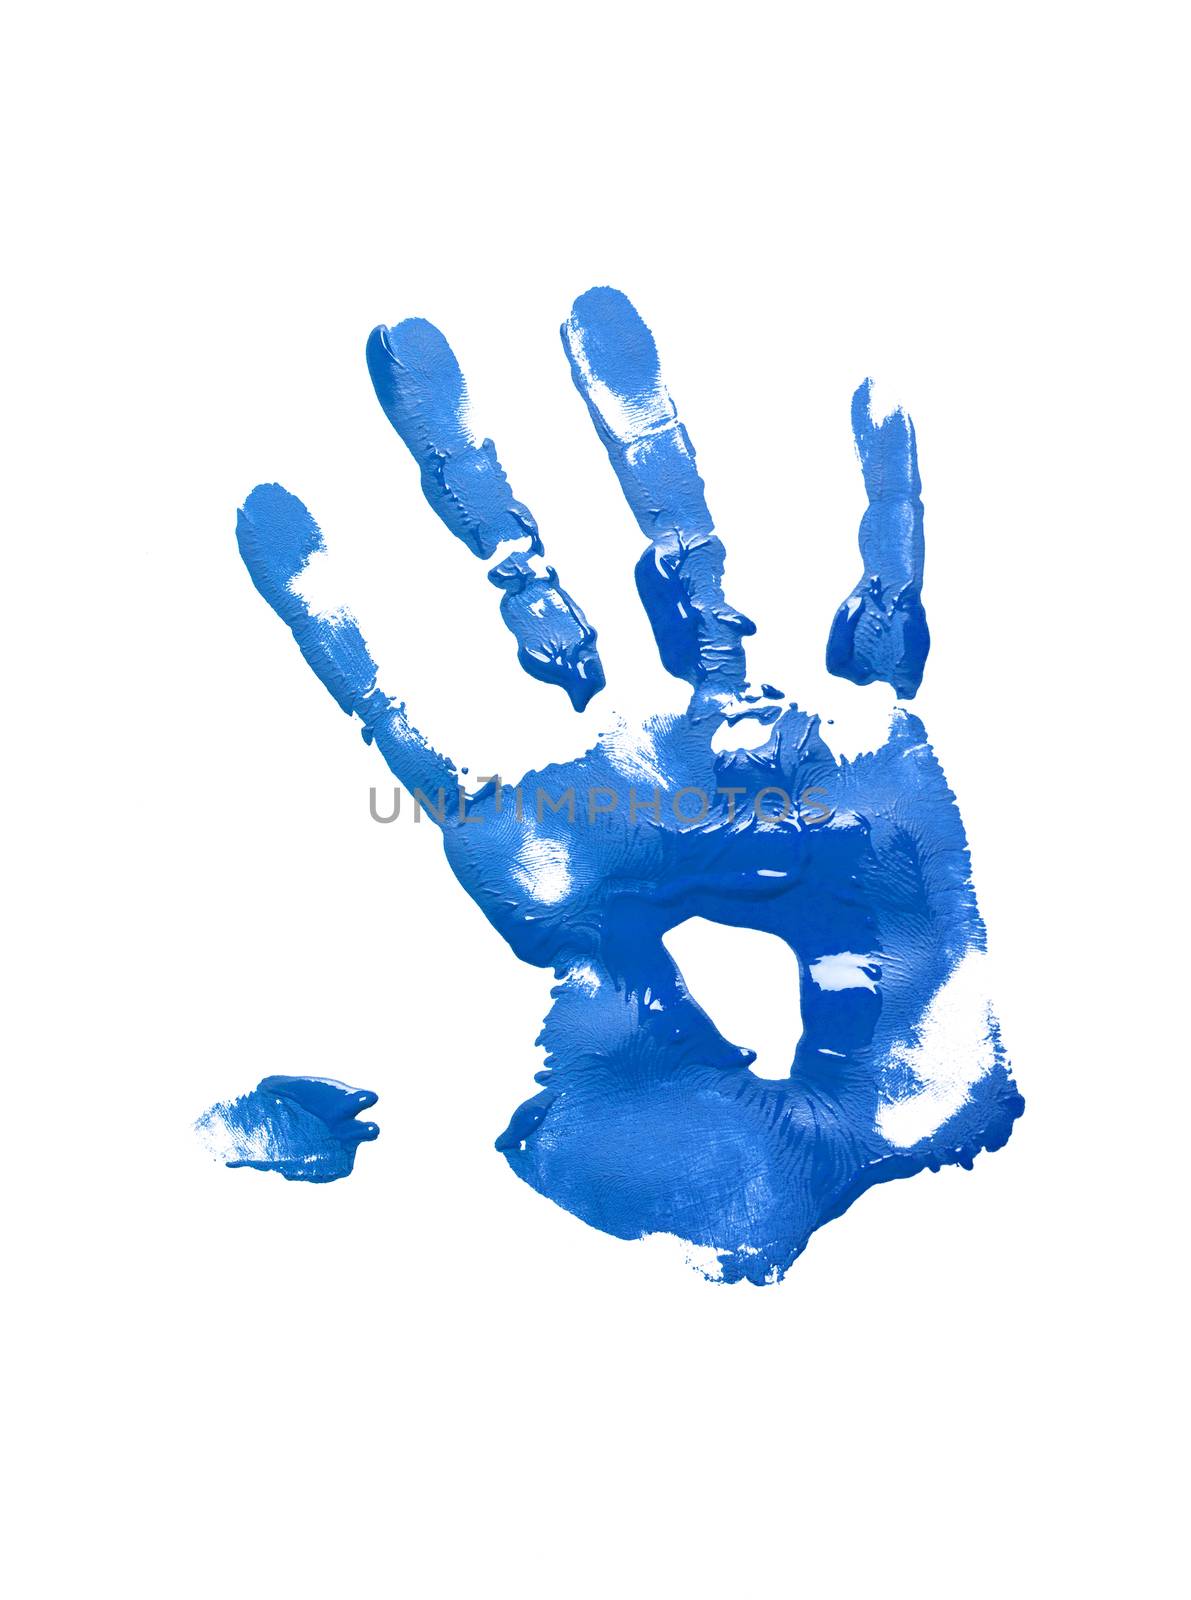 Blue handprint on white by gemenacom